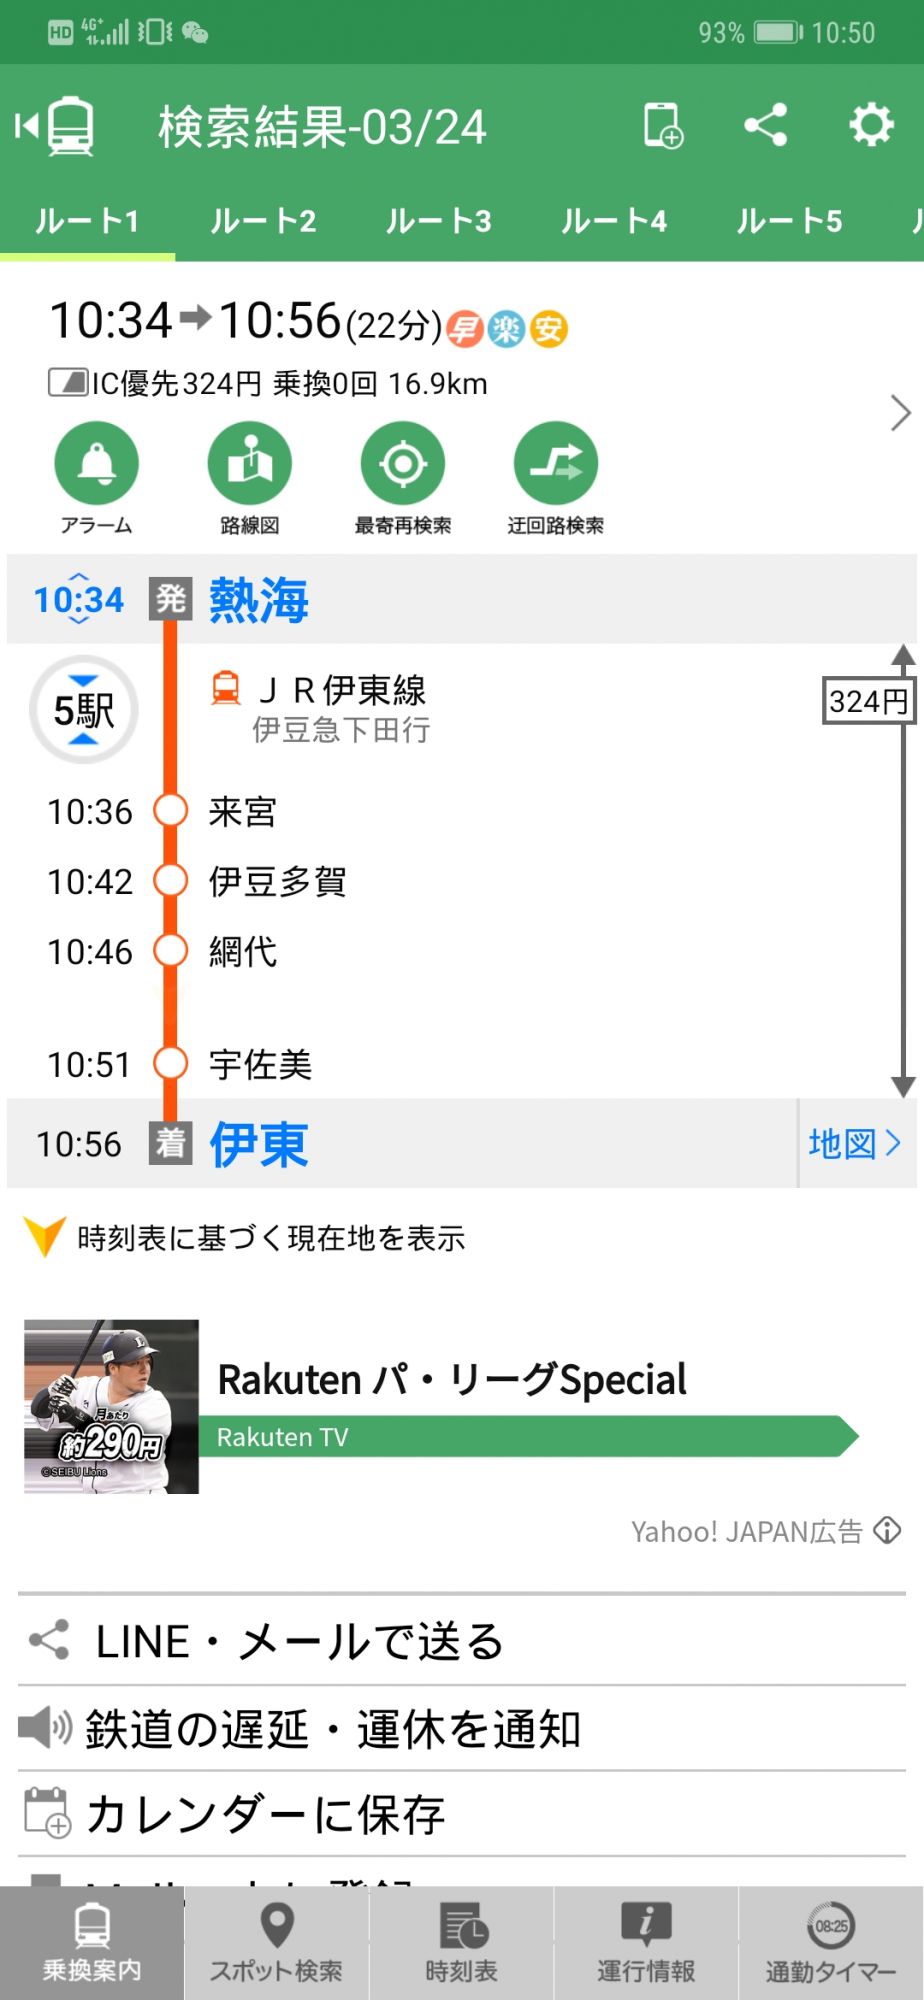 Screenshot_20190324_105058_jp.co.yahoo.android.apps.transit.jpg